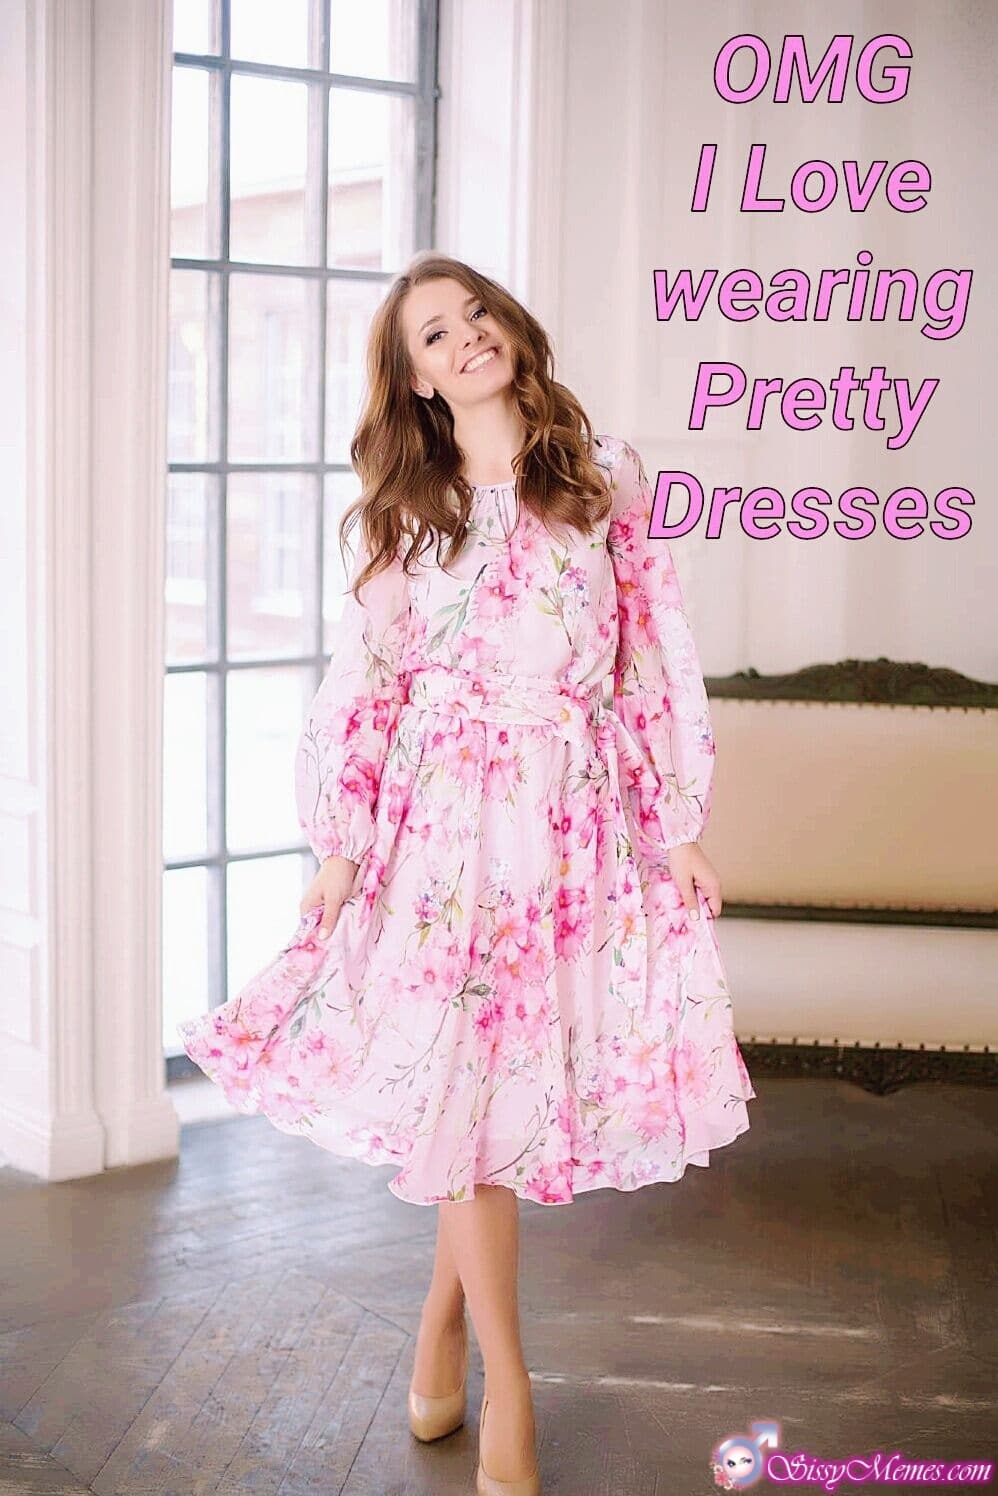 Feminization Femboy hotwife caption: OMG I Love wearing Pretty Dresses Beautiful Brunette in Light Summer Dress